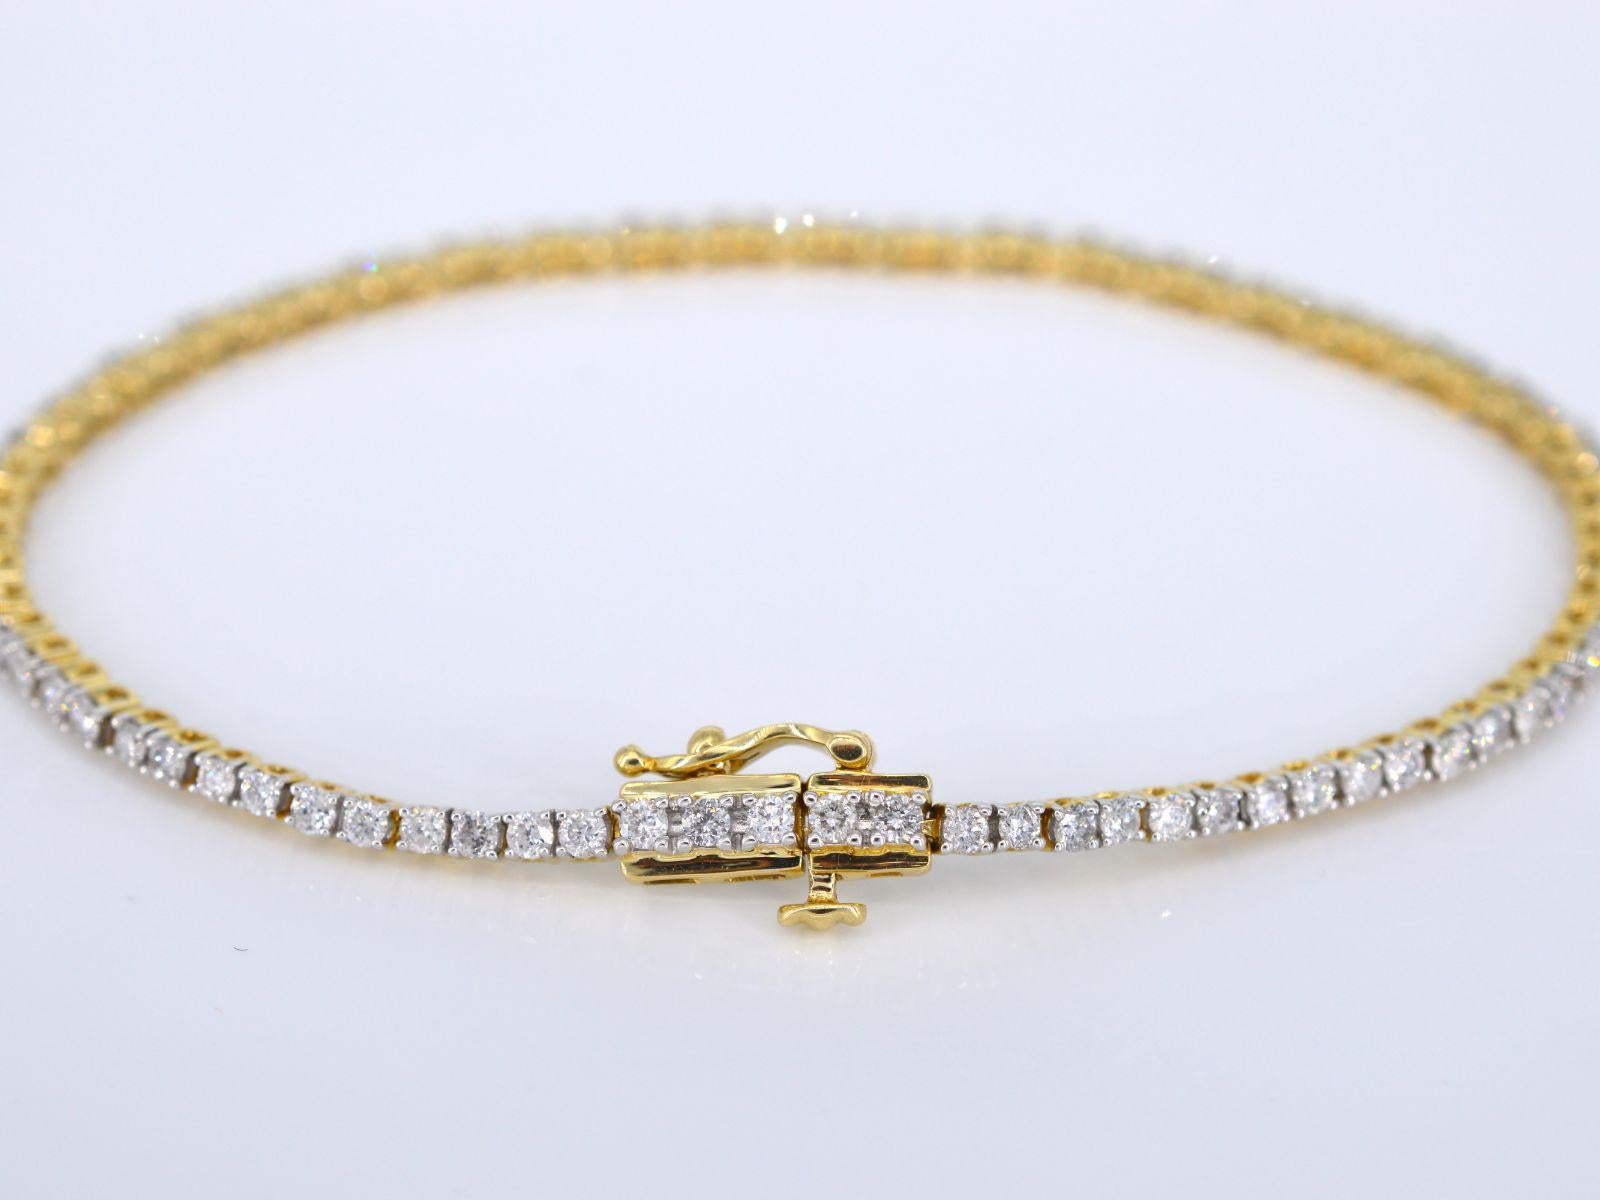 Brilliant Cut Gold tennis bracelet with diamonds 2.50 carat For Sale